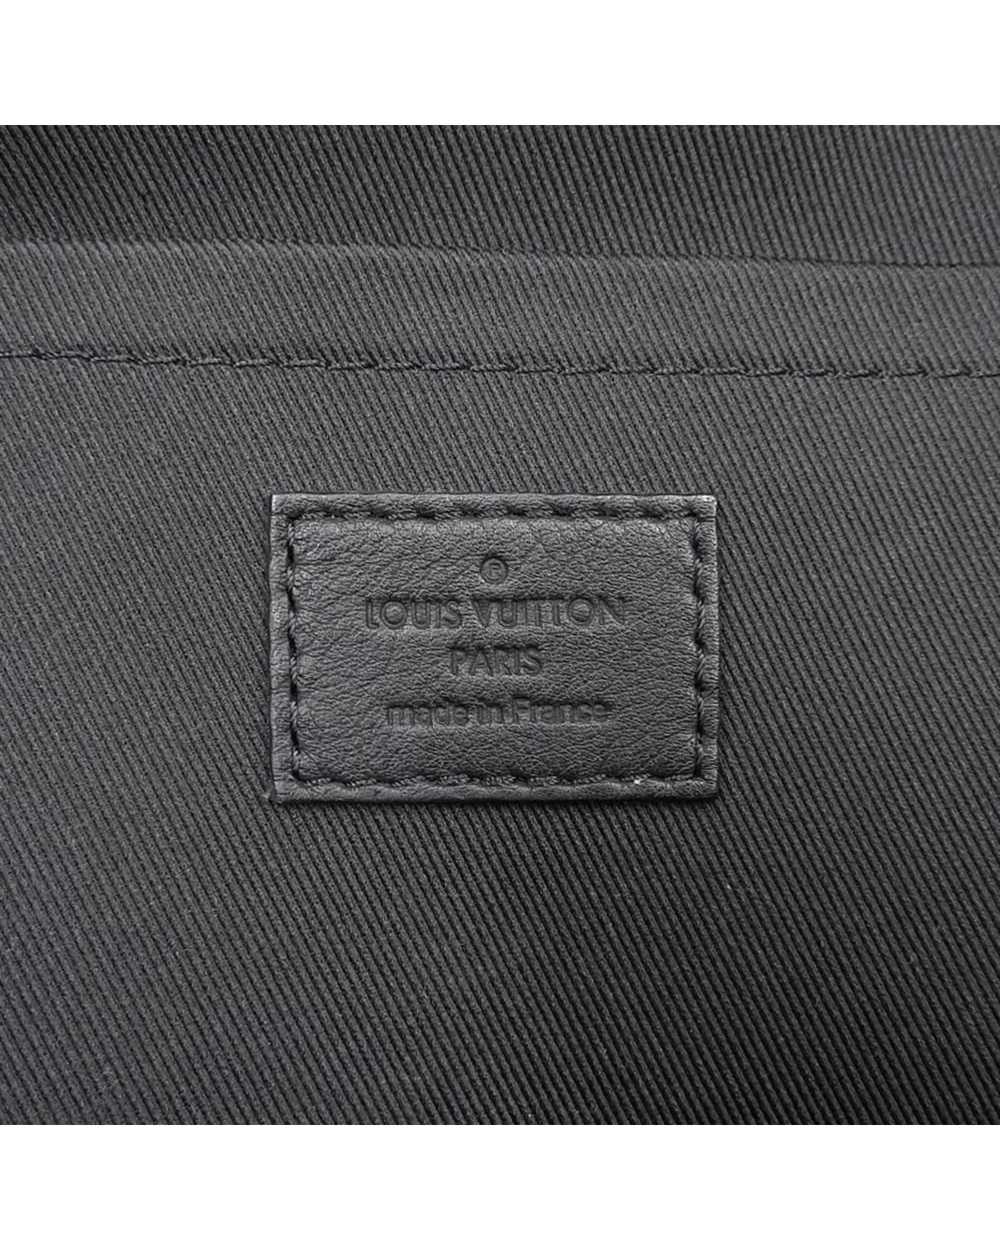 Louis Vuitton Iconic Monogram Canvas Backpack - image 10